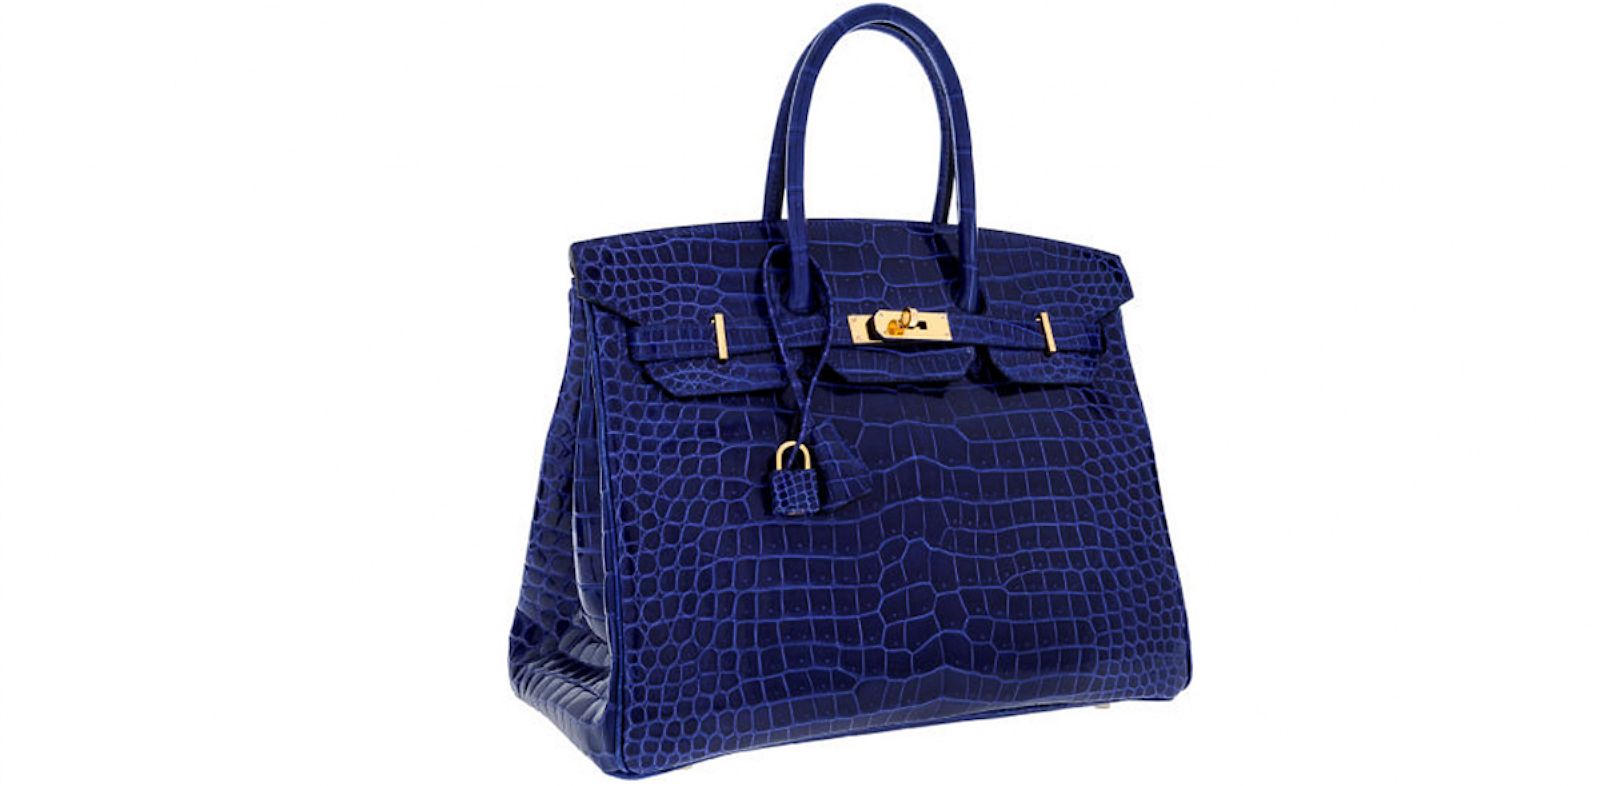 Hermes Bag Price In Paris France | IQS Executive